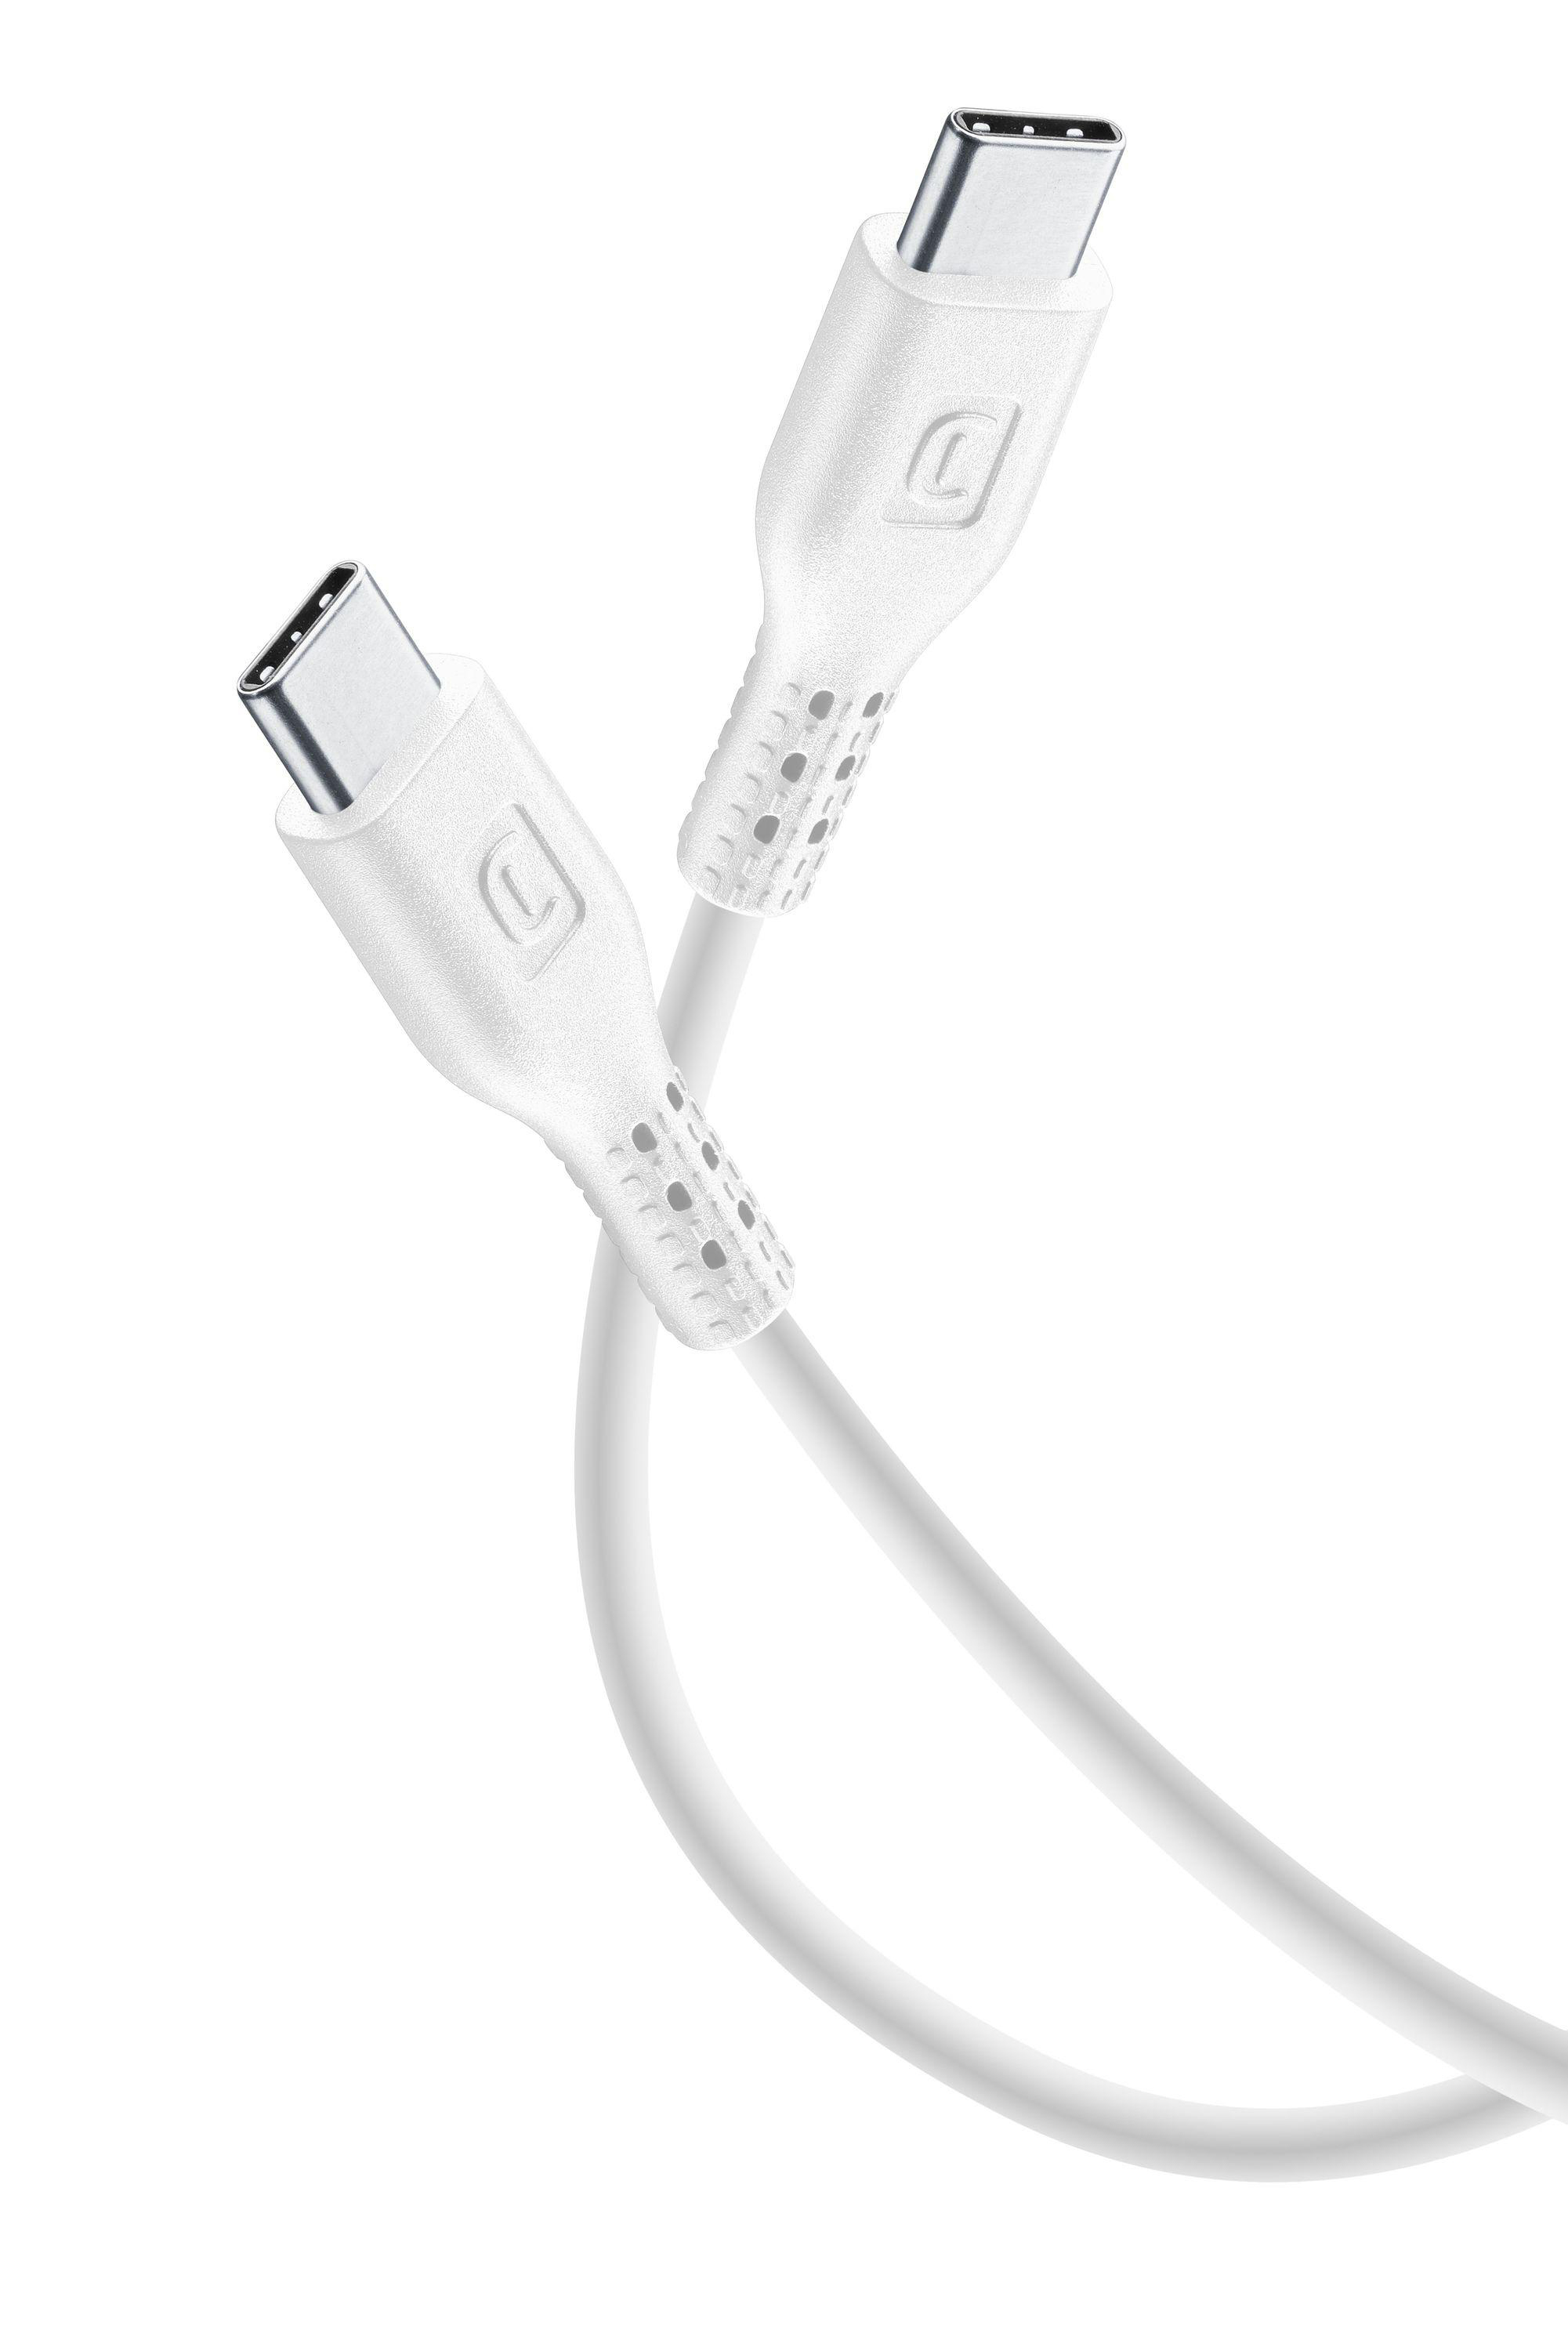 CELLULAR LINE Power Cable USB-C auf USB-C, Weiß 2 m, Datenkabel/Ladekabel